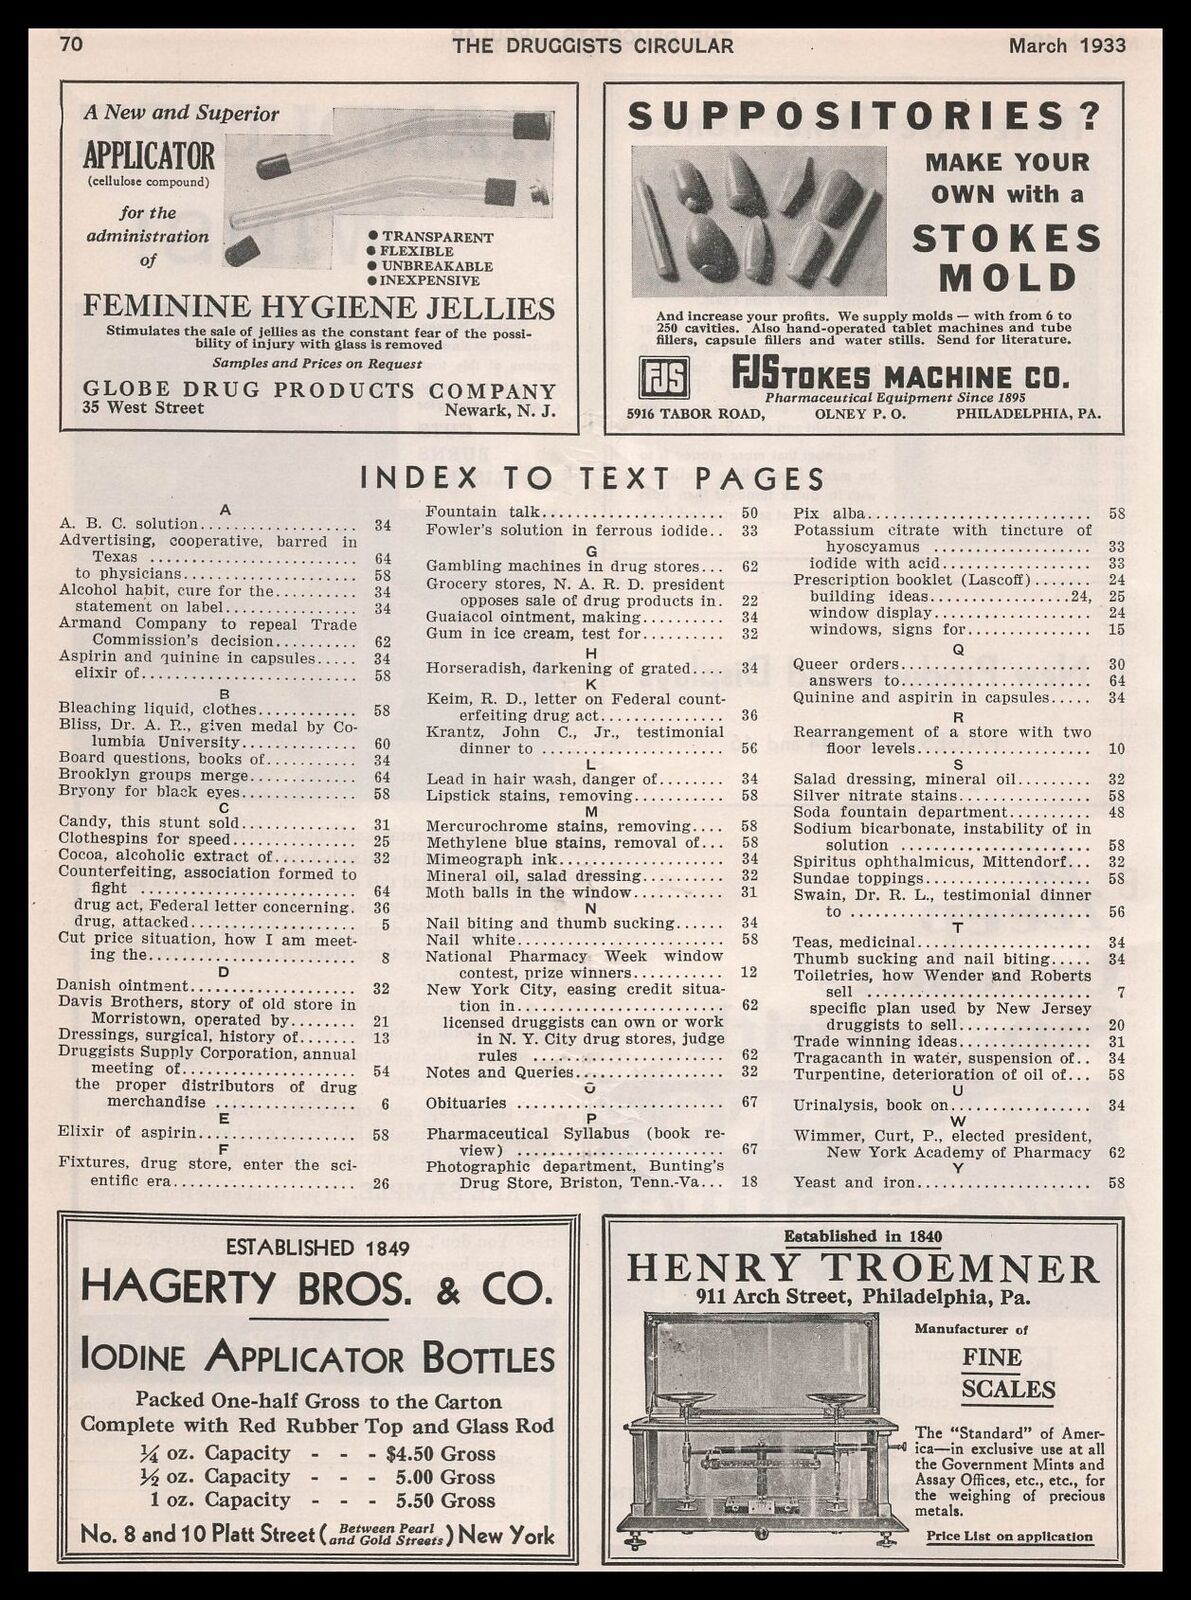 1933 Henry Troemner Philadelphia Pennsylvania Fine Drug Store Scales Print Ad